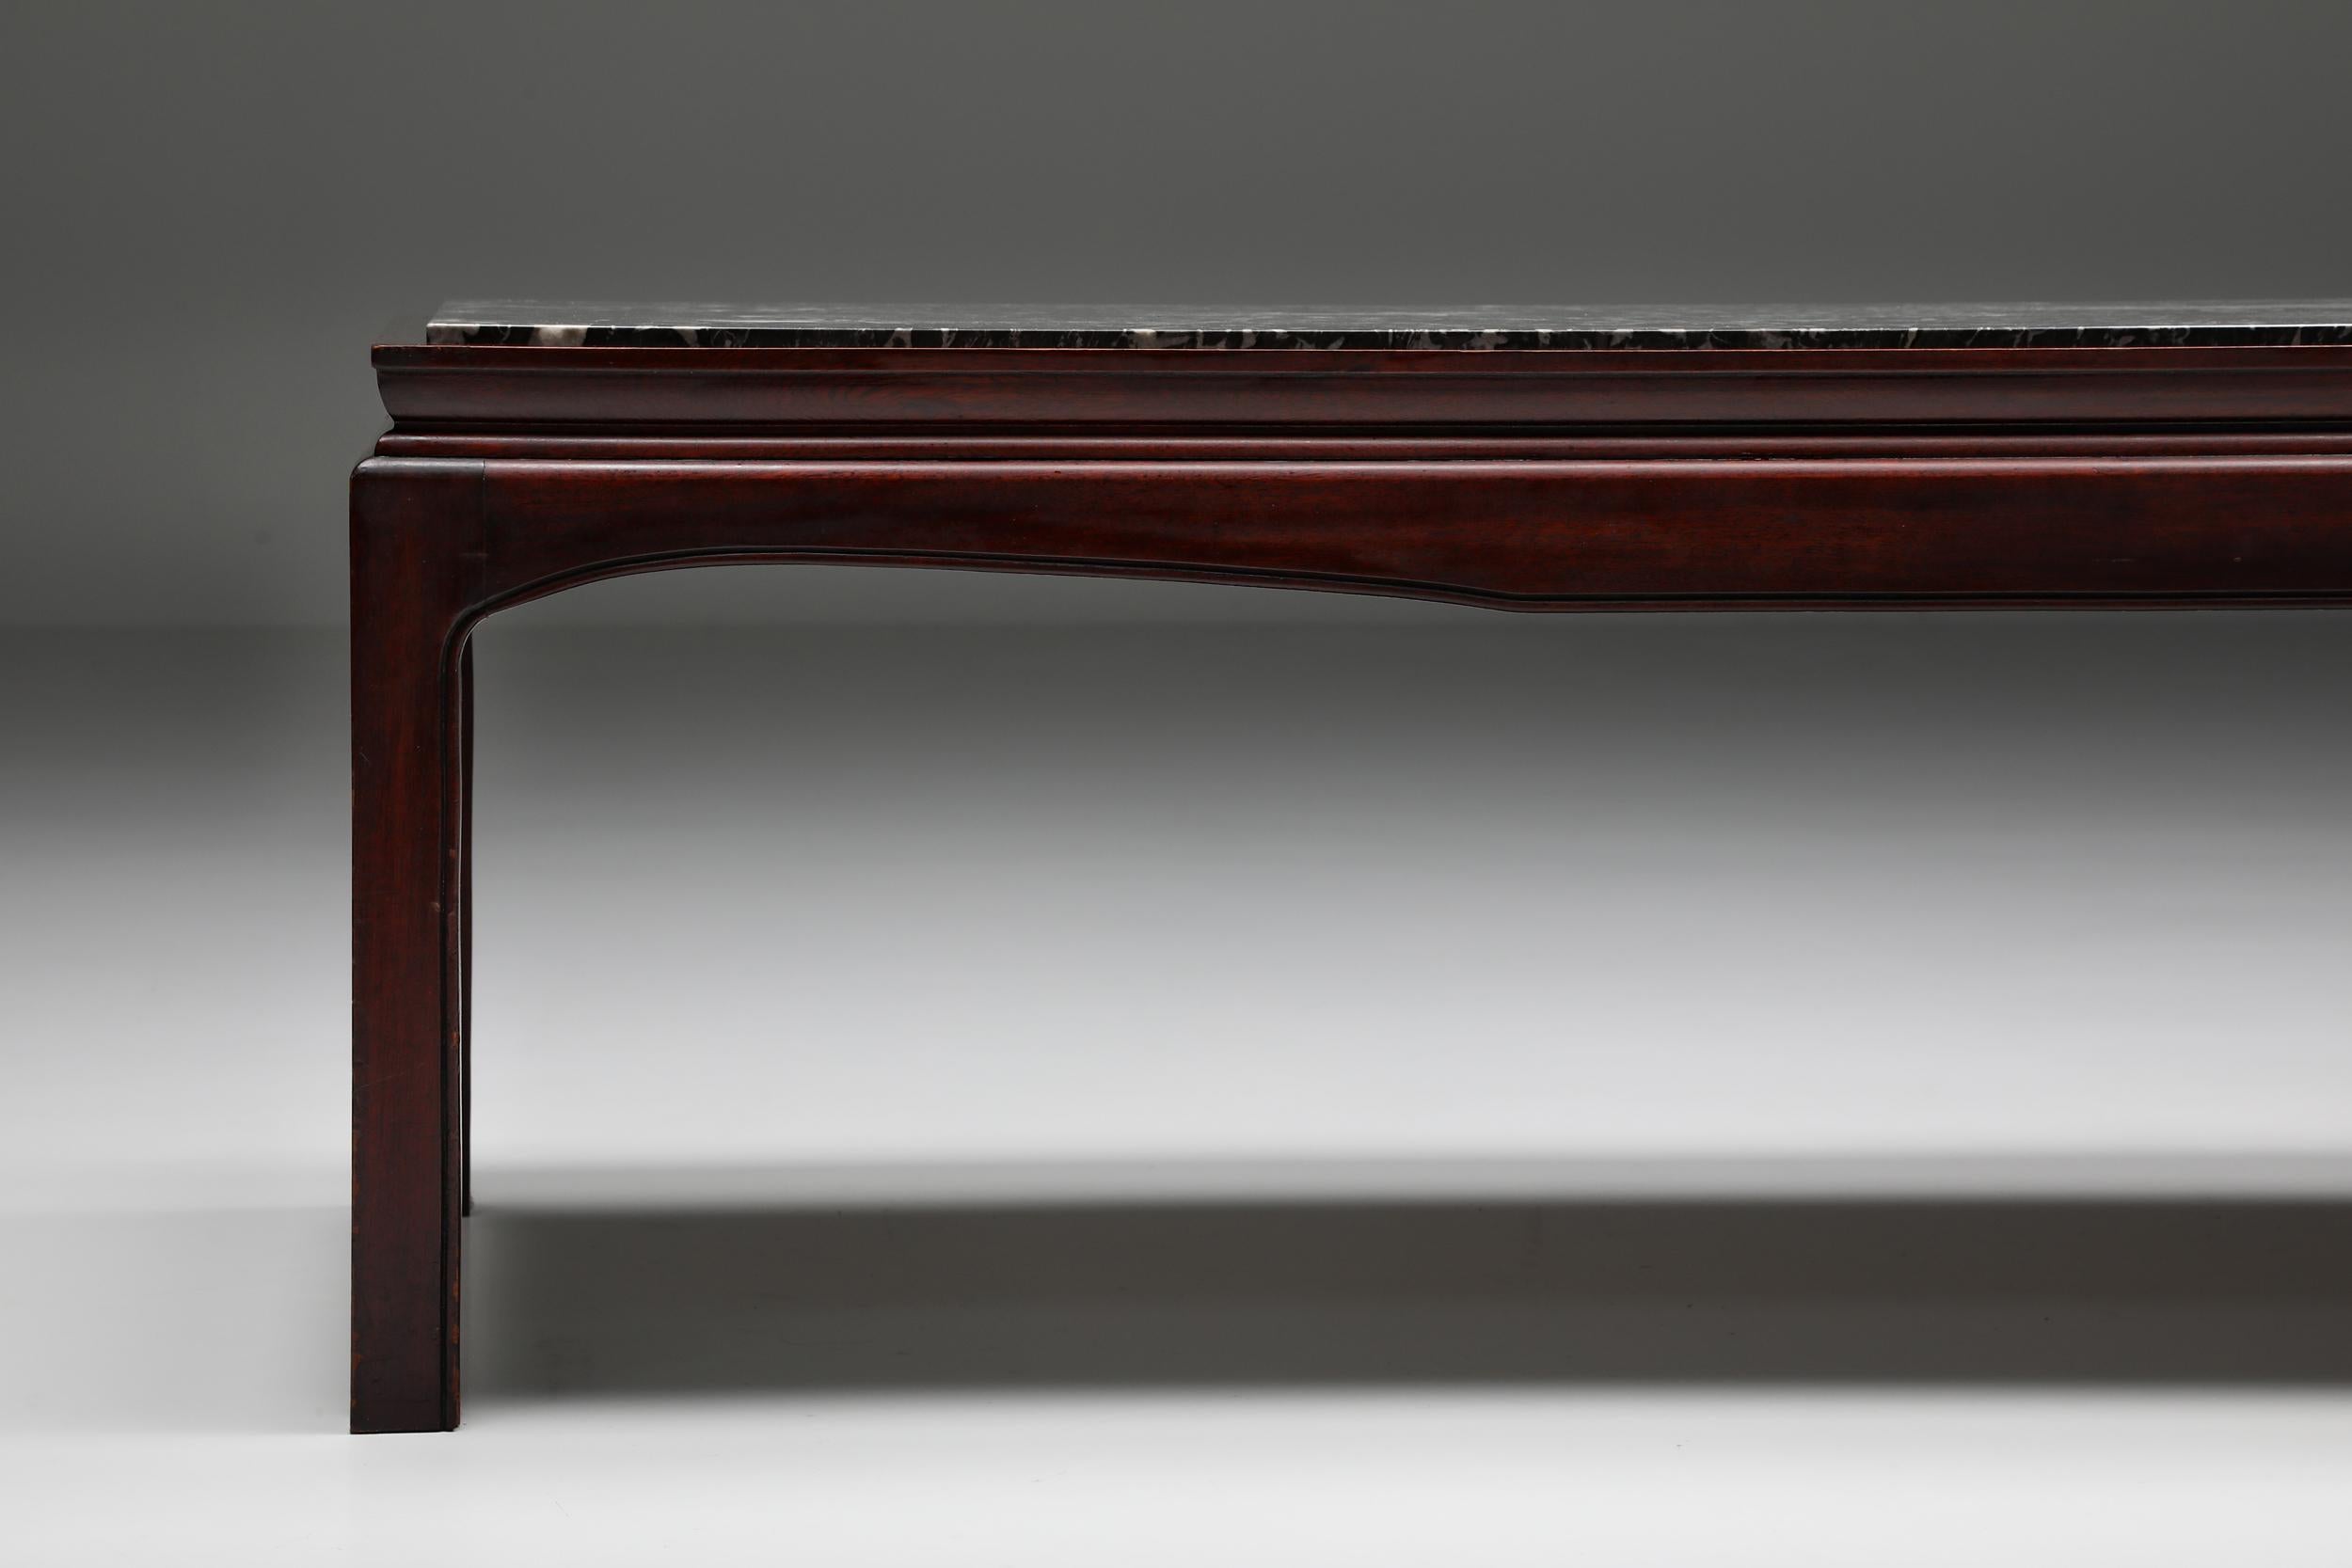 De Coene Marble and Mahogany Coffee Table, Art Deco, Japanoiserie Style, Belgium 1